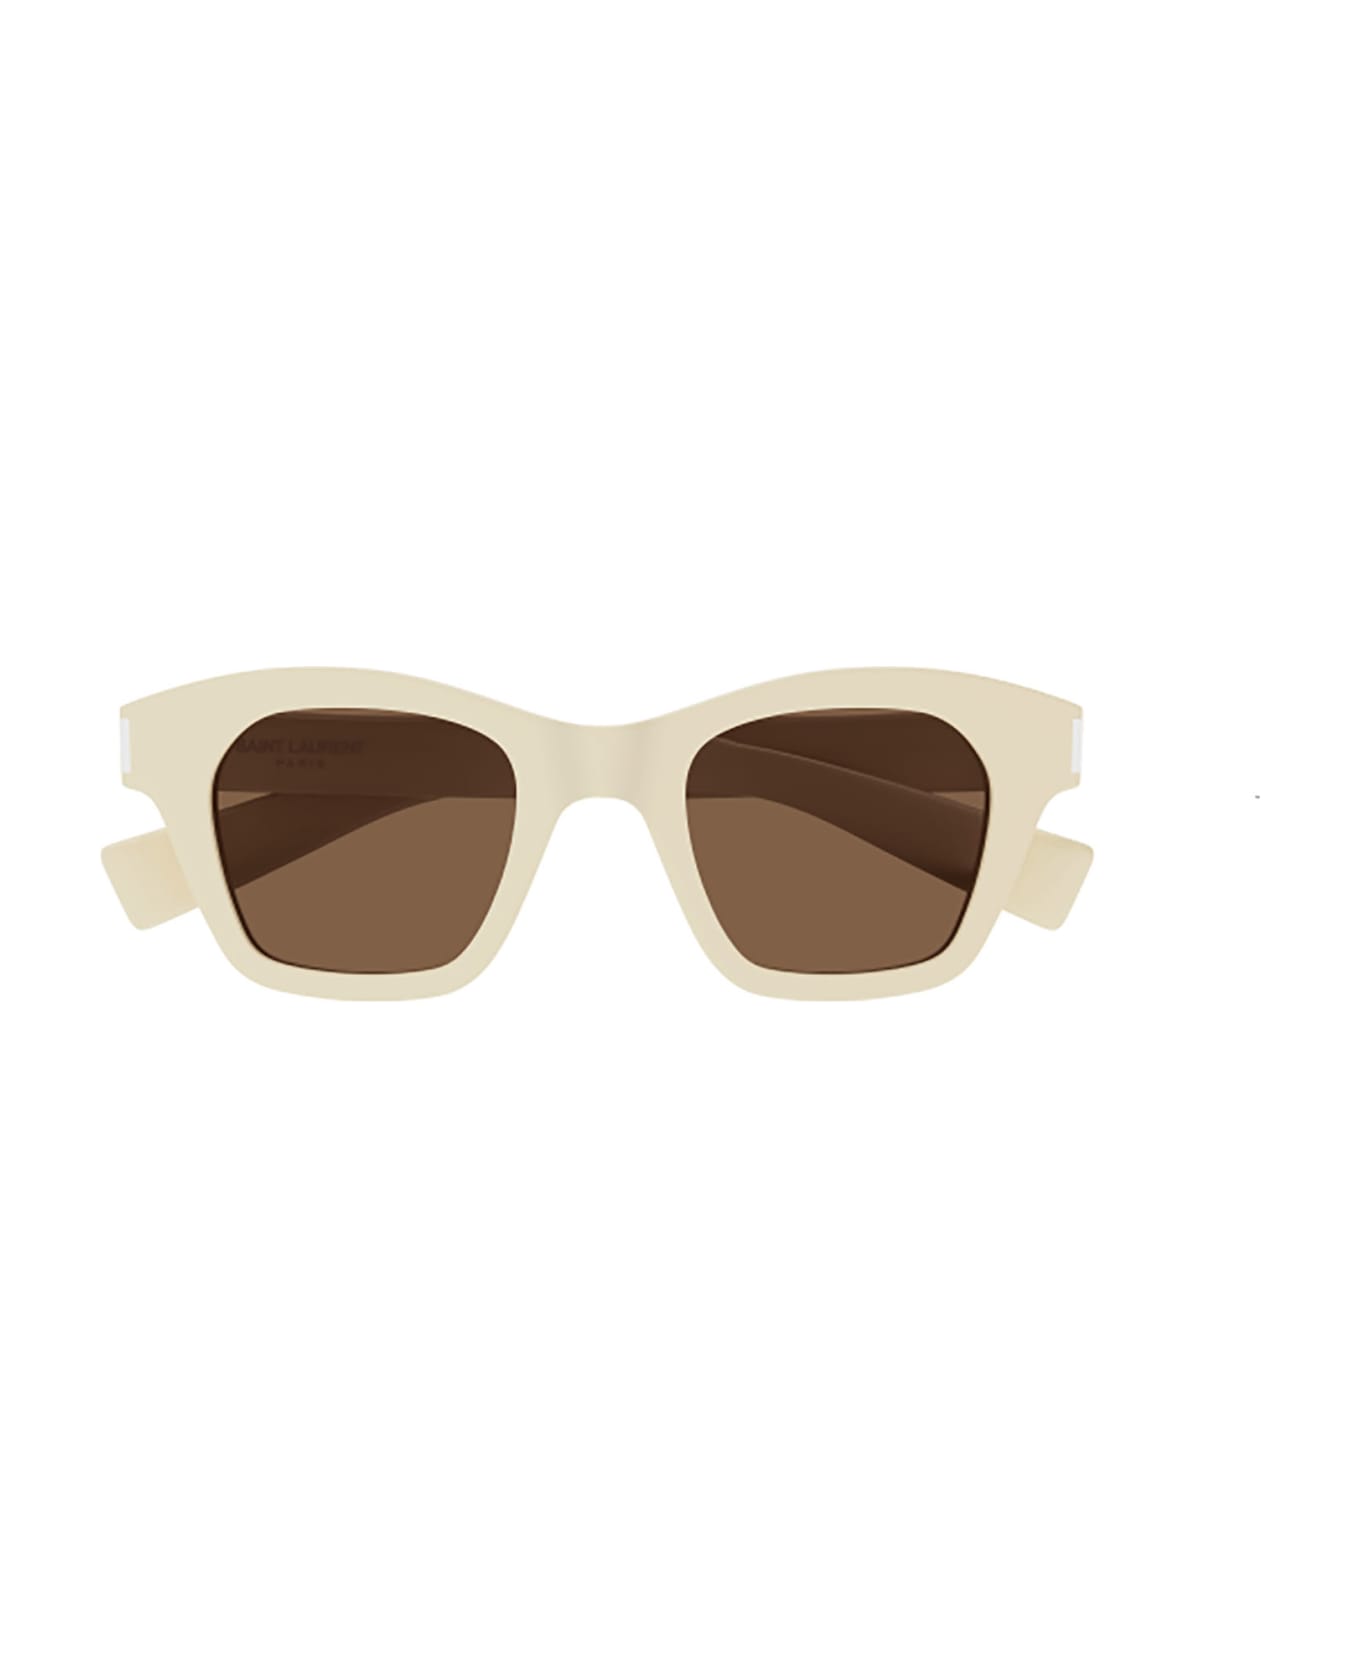 Saint Laurent Eyewear SL 592 Sunglasses - Ivory Ivory Brown